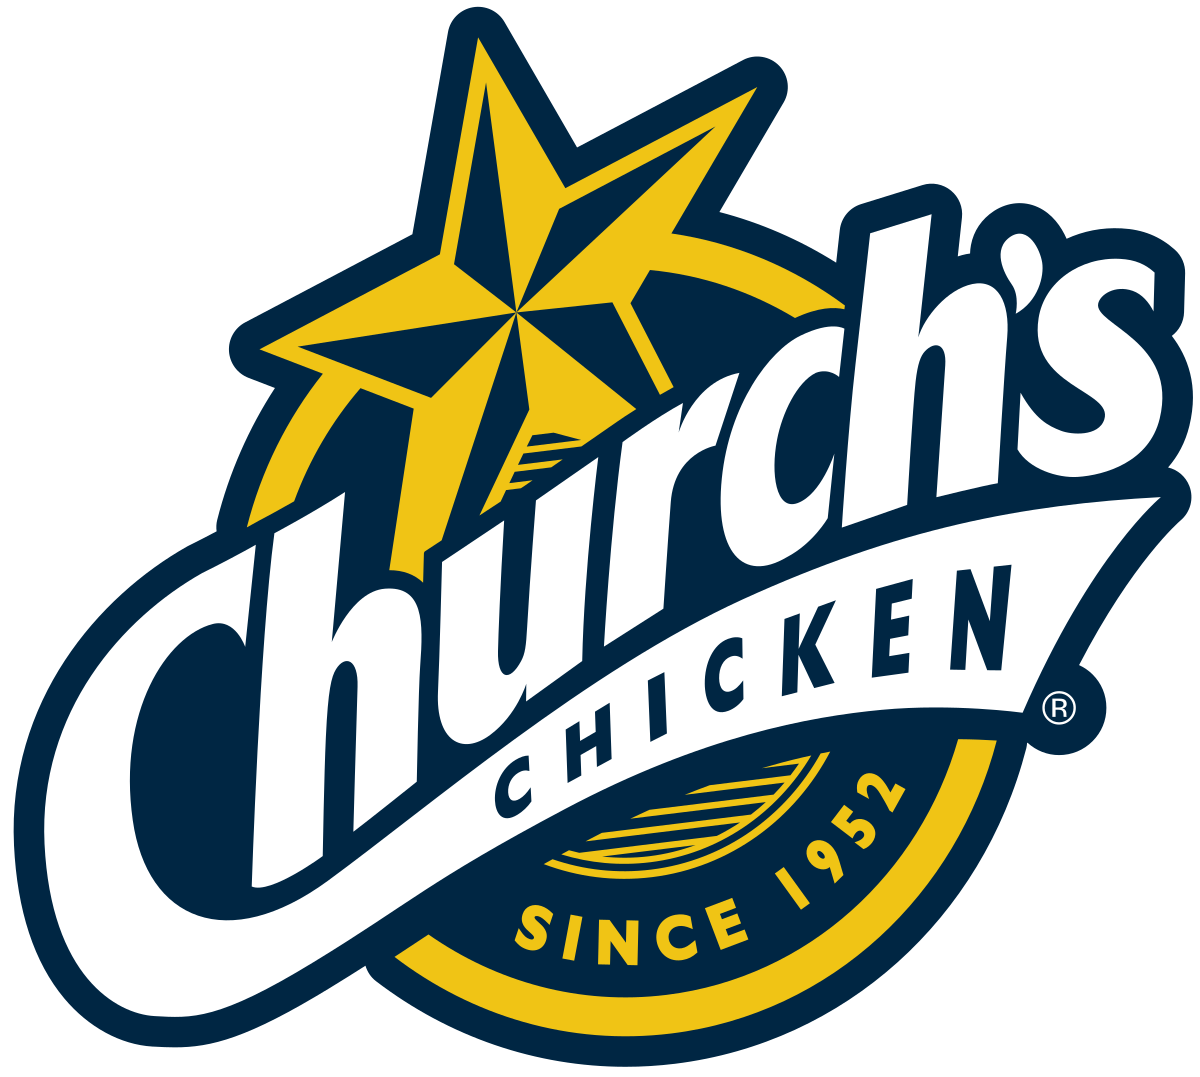 church's chicken menu